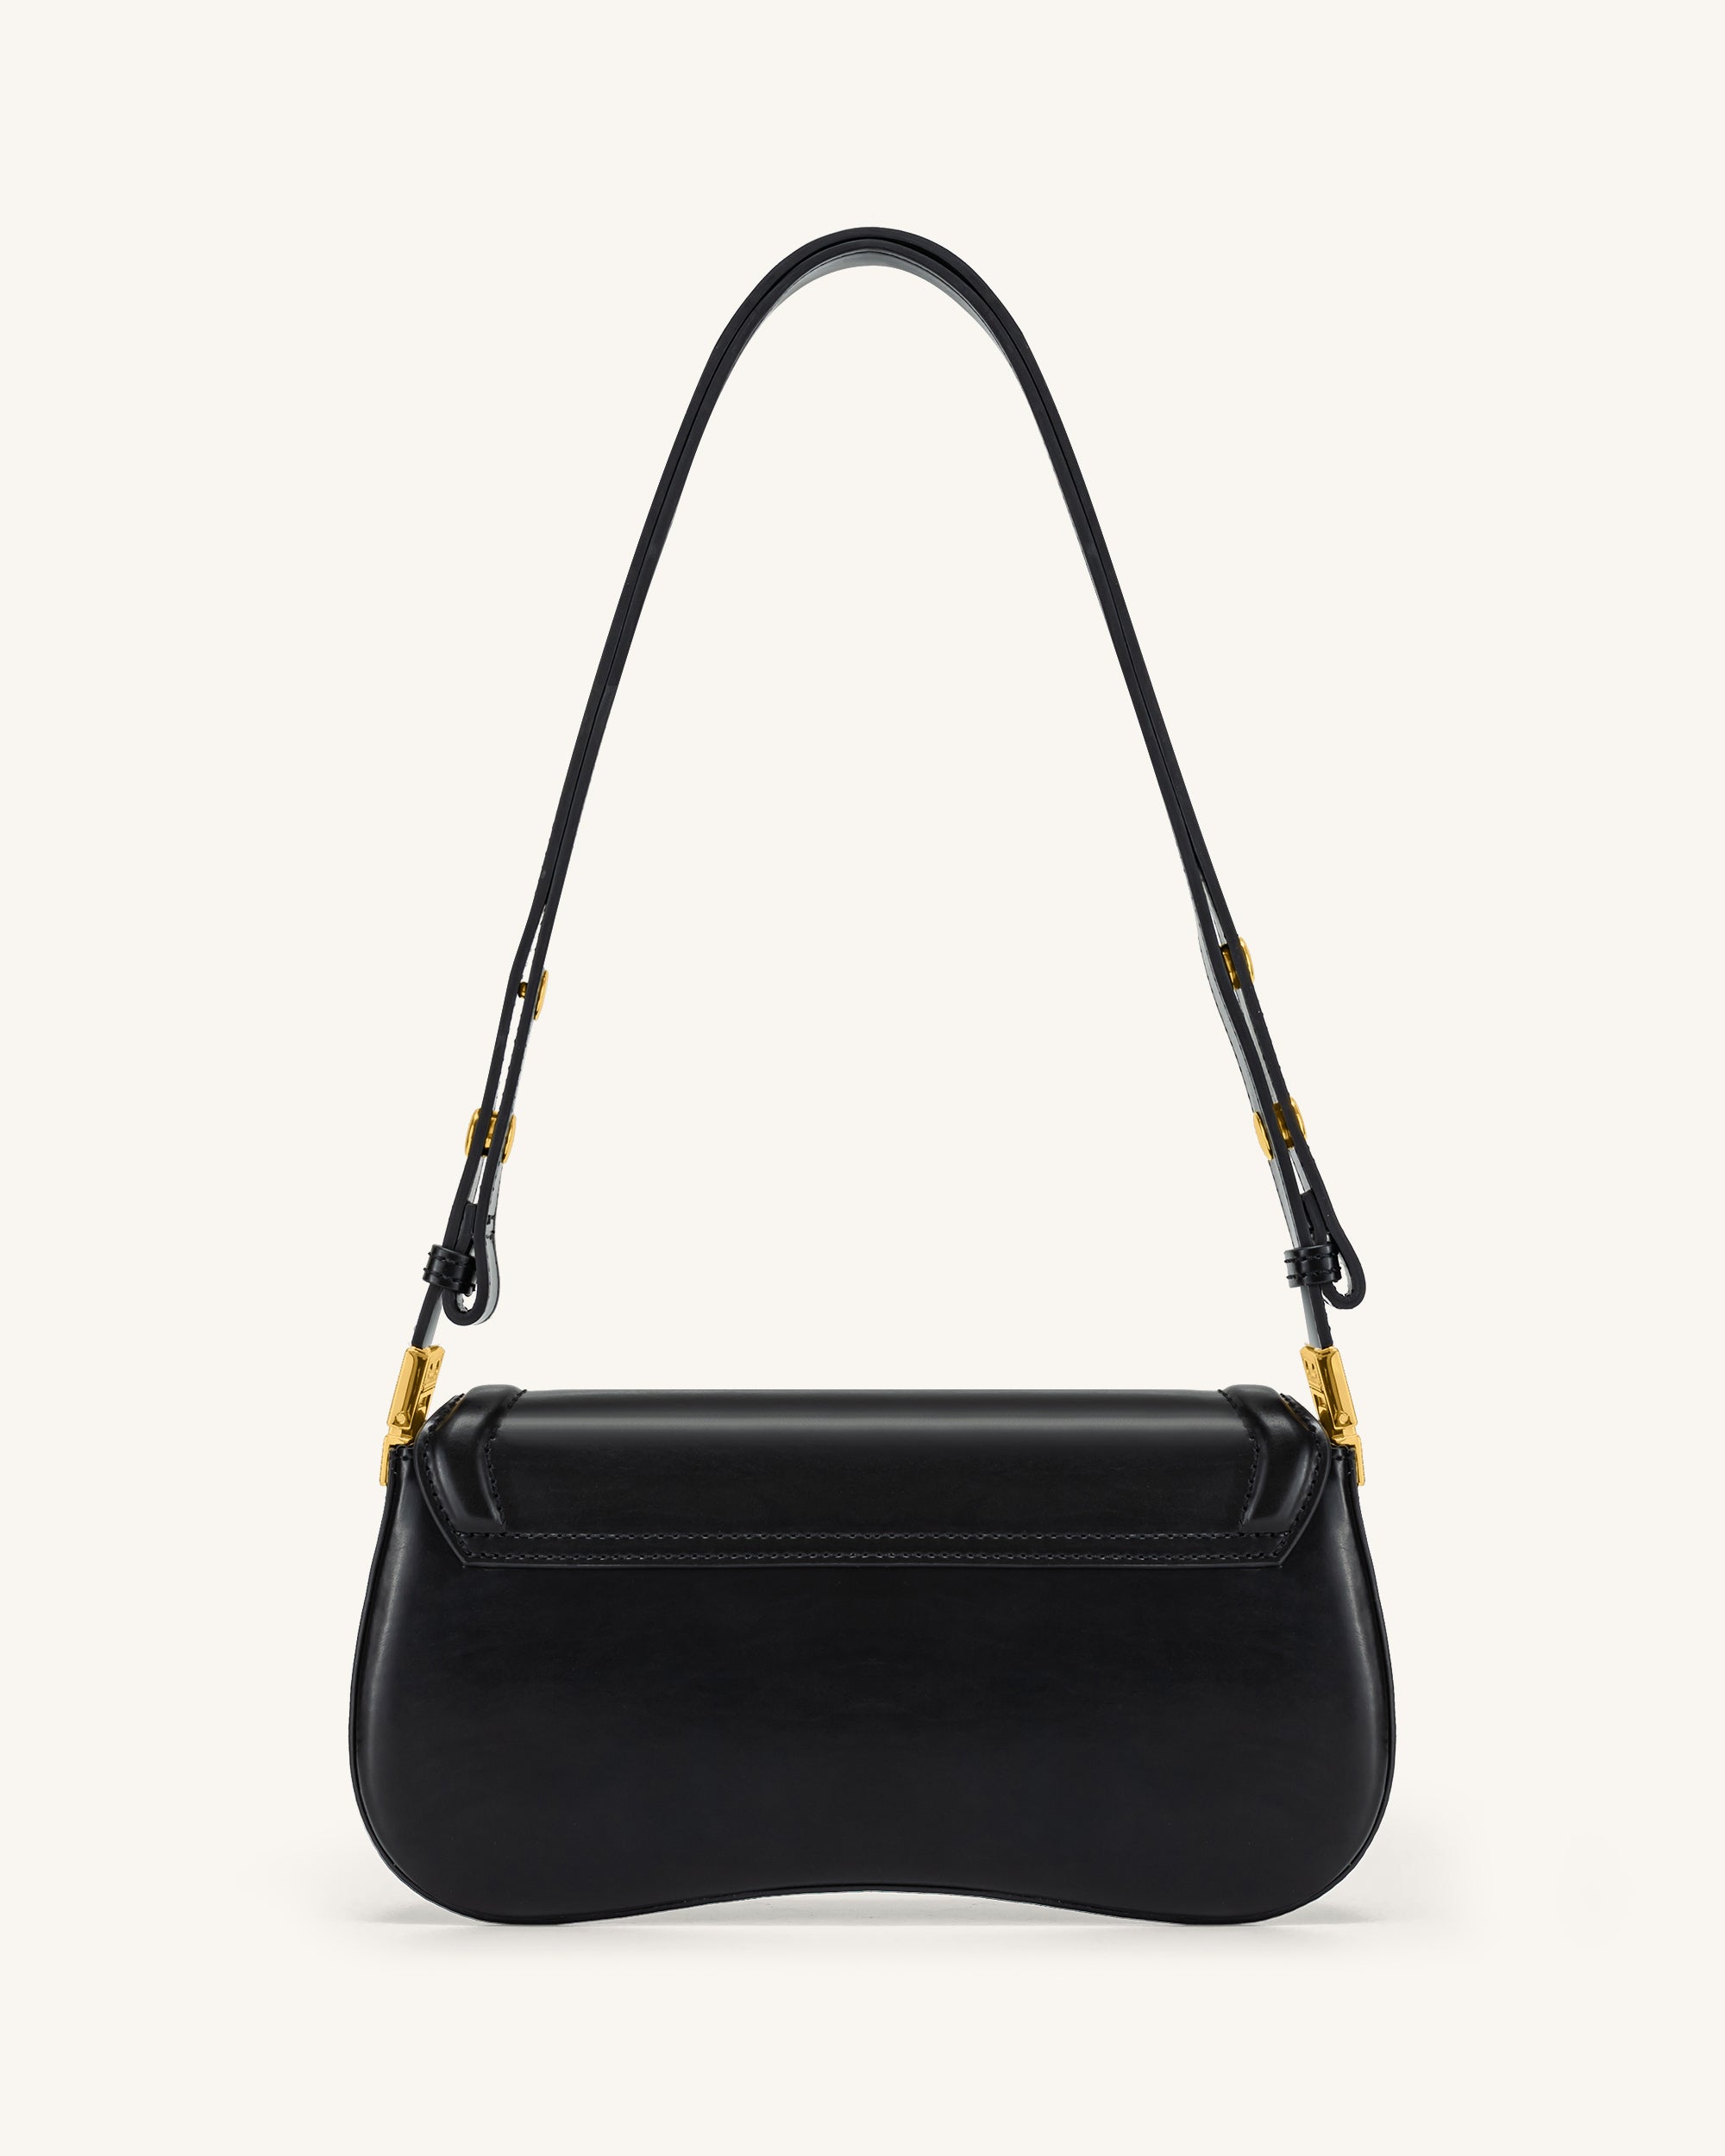 Buy Online Lv Handbag Long Strap With Box In Pakistan, Best Price